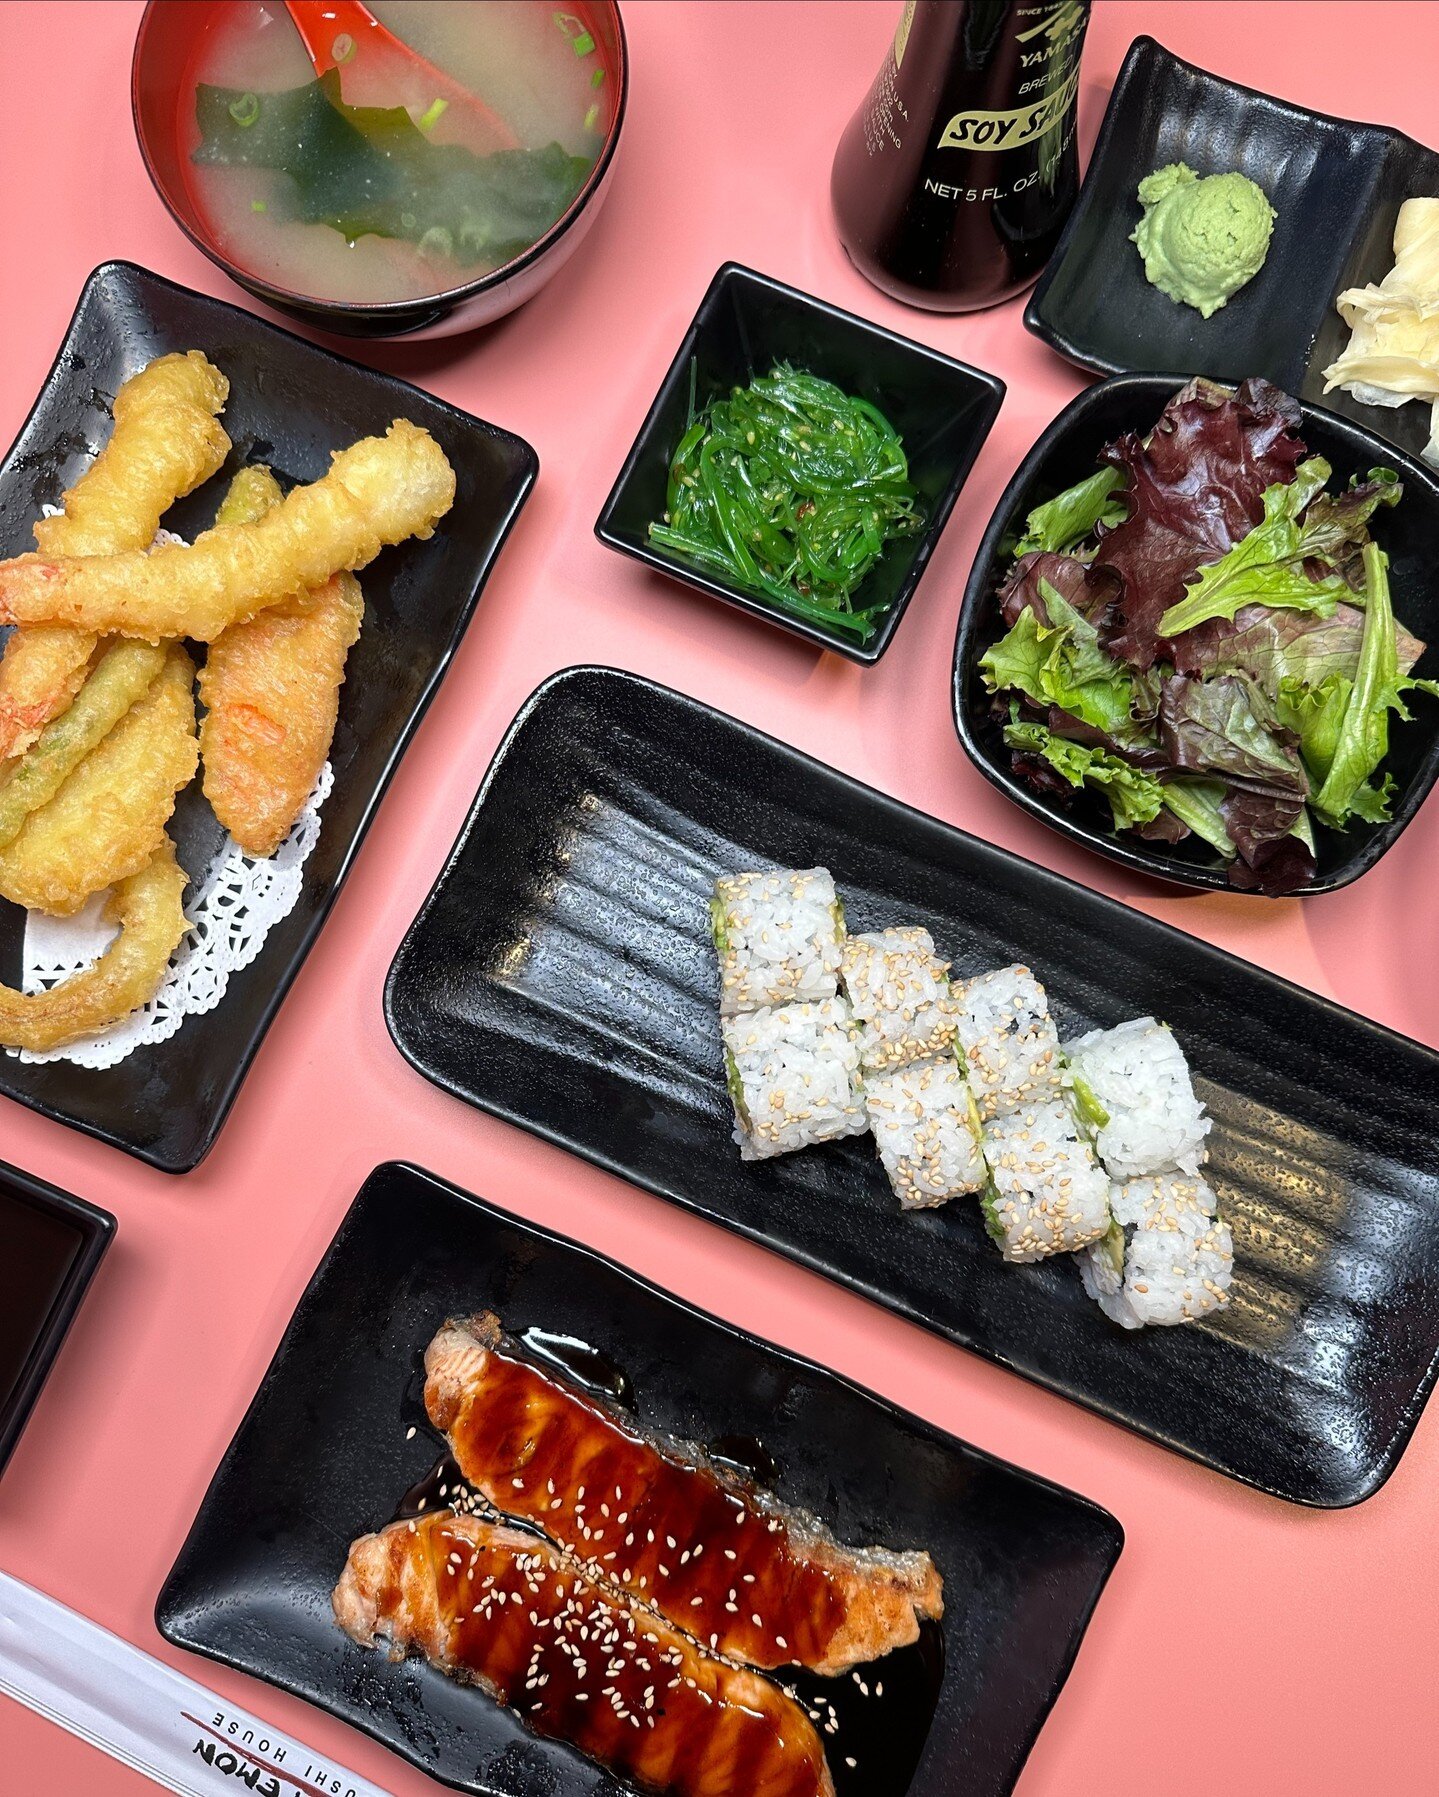 Brighten your day, with one bite of Japanese goodness at a time ITADAKIMASU! #UmamiJourney 🍣✨ 

◾️◽️◾️◽️◾️◽️◾️◽️◾️◽️ 
🍣 𝗔𝗬𝗖𝗘 𝗦𝗨𝗦𝗛𝗜 𝗛𝗢𝗨𝗦𝗘 𝗚𝗢𝗬𝗘𝗠𝗢𝗡 
⏰ ᴅᴀɪʟʏ: 12:00 ᴘᴍ - 11:00 ᴘᴍ 
⏰ ʟᴀꜱᴛ ꜱᴇᴀᴛɪɴɢ ꜰᴏʀ ᴀʏᴄᴇ 10ᴘᴍ 
⏰ ʟᴀꜱᴛ ᴏʀᴅᴇʀ 10:30ᴘᴍ 